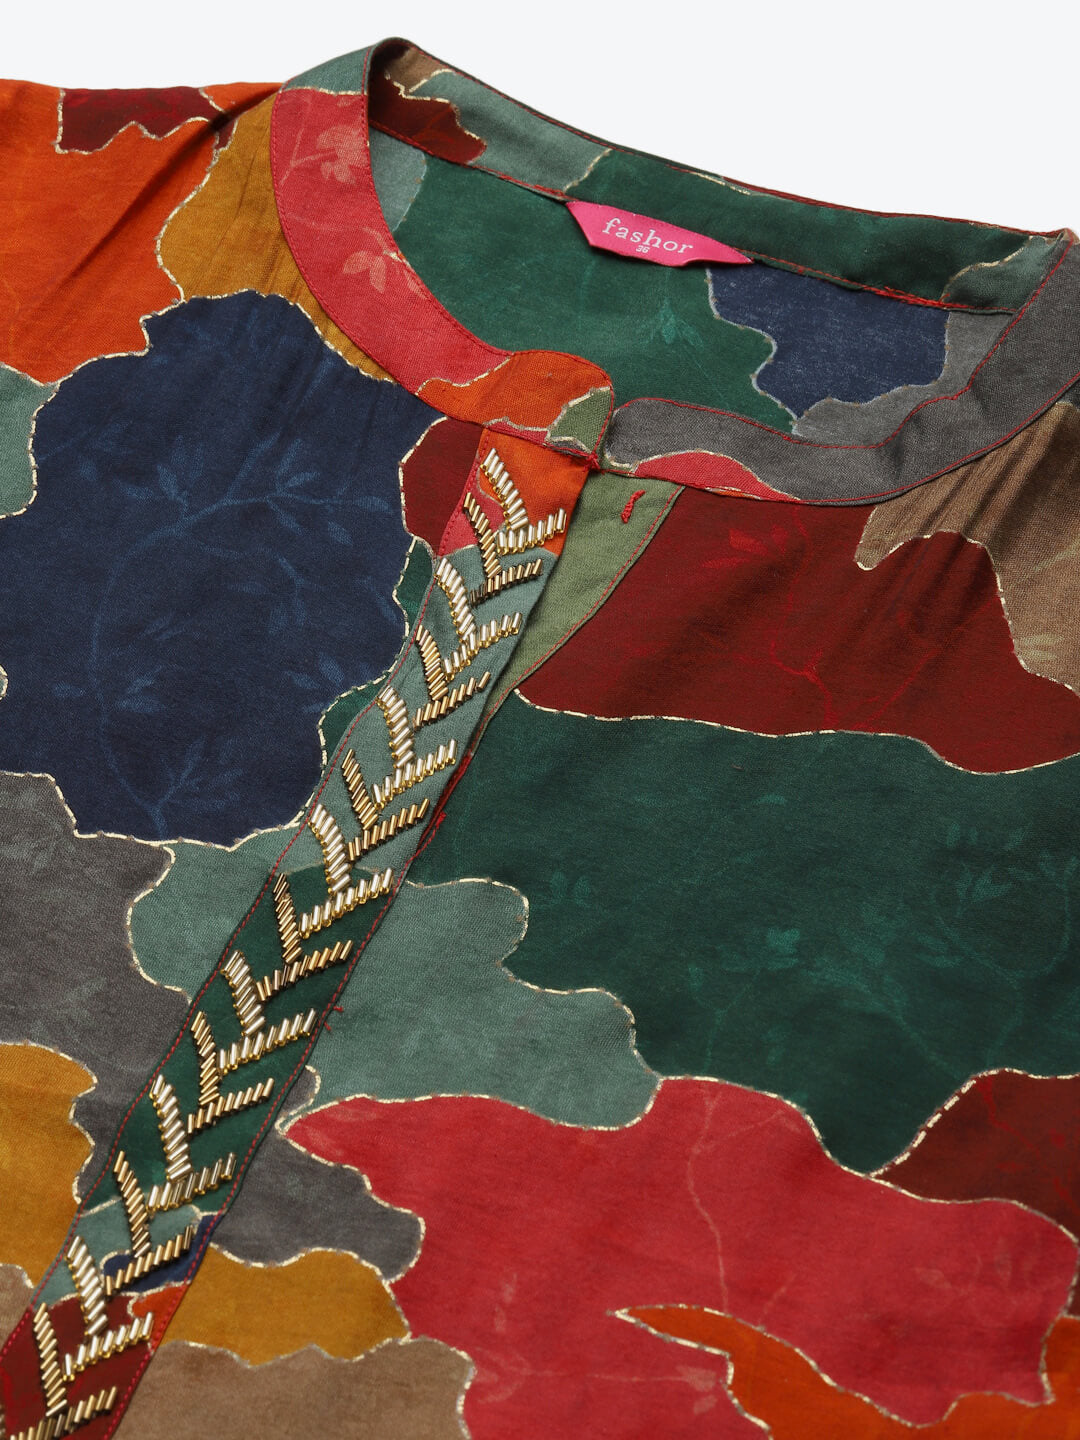 Colorful Printed & Embellished Straight Kurta – Multi